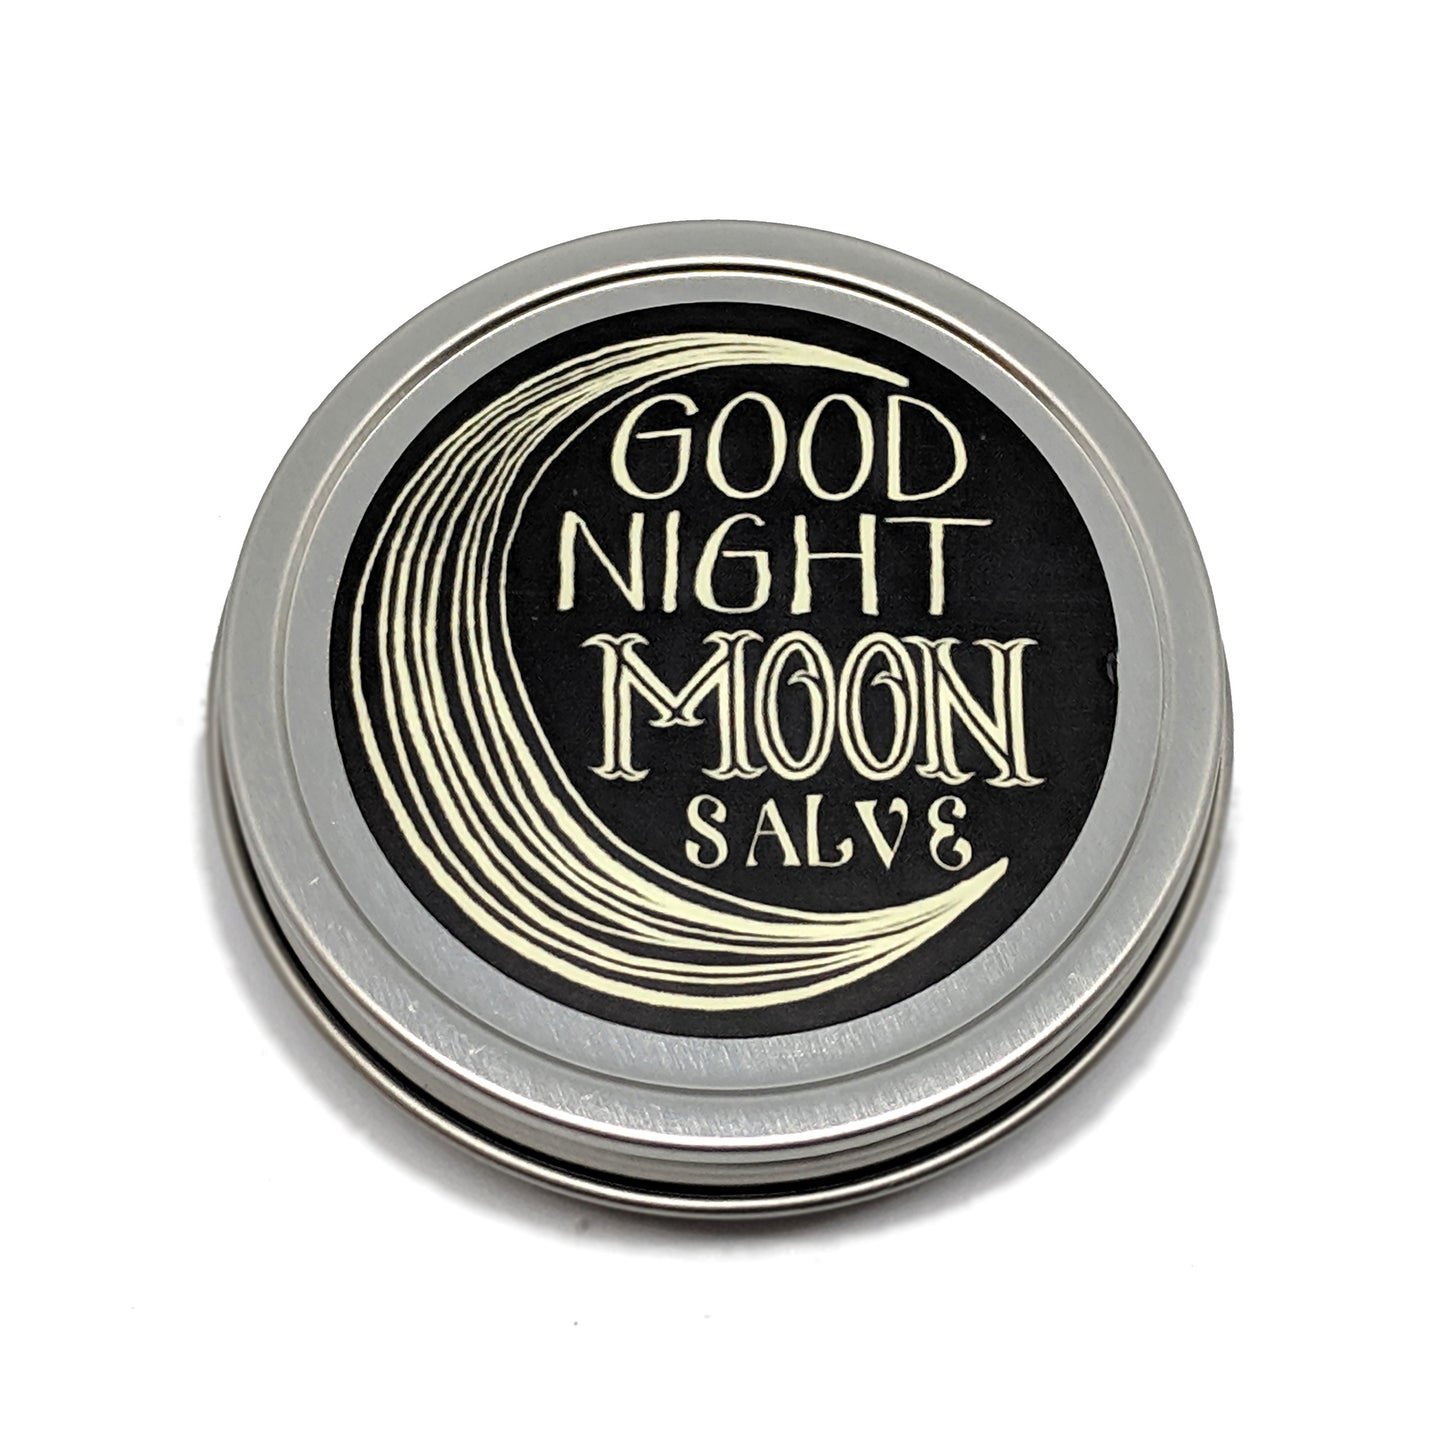 Good Night Moon Salve - 2oz